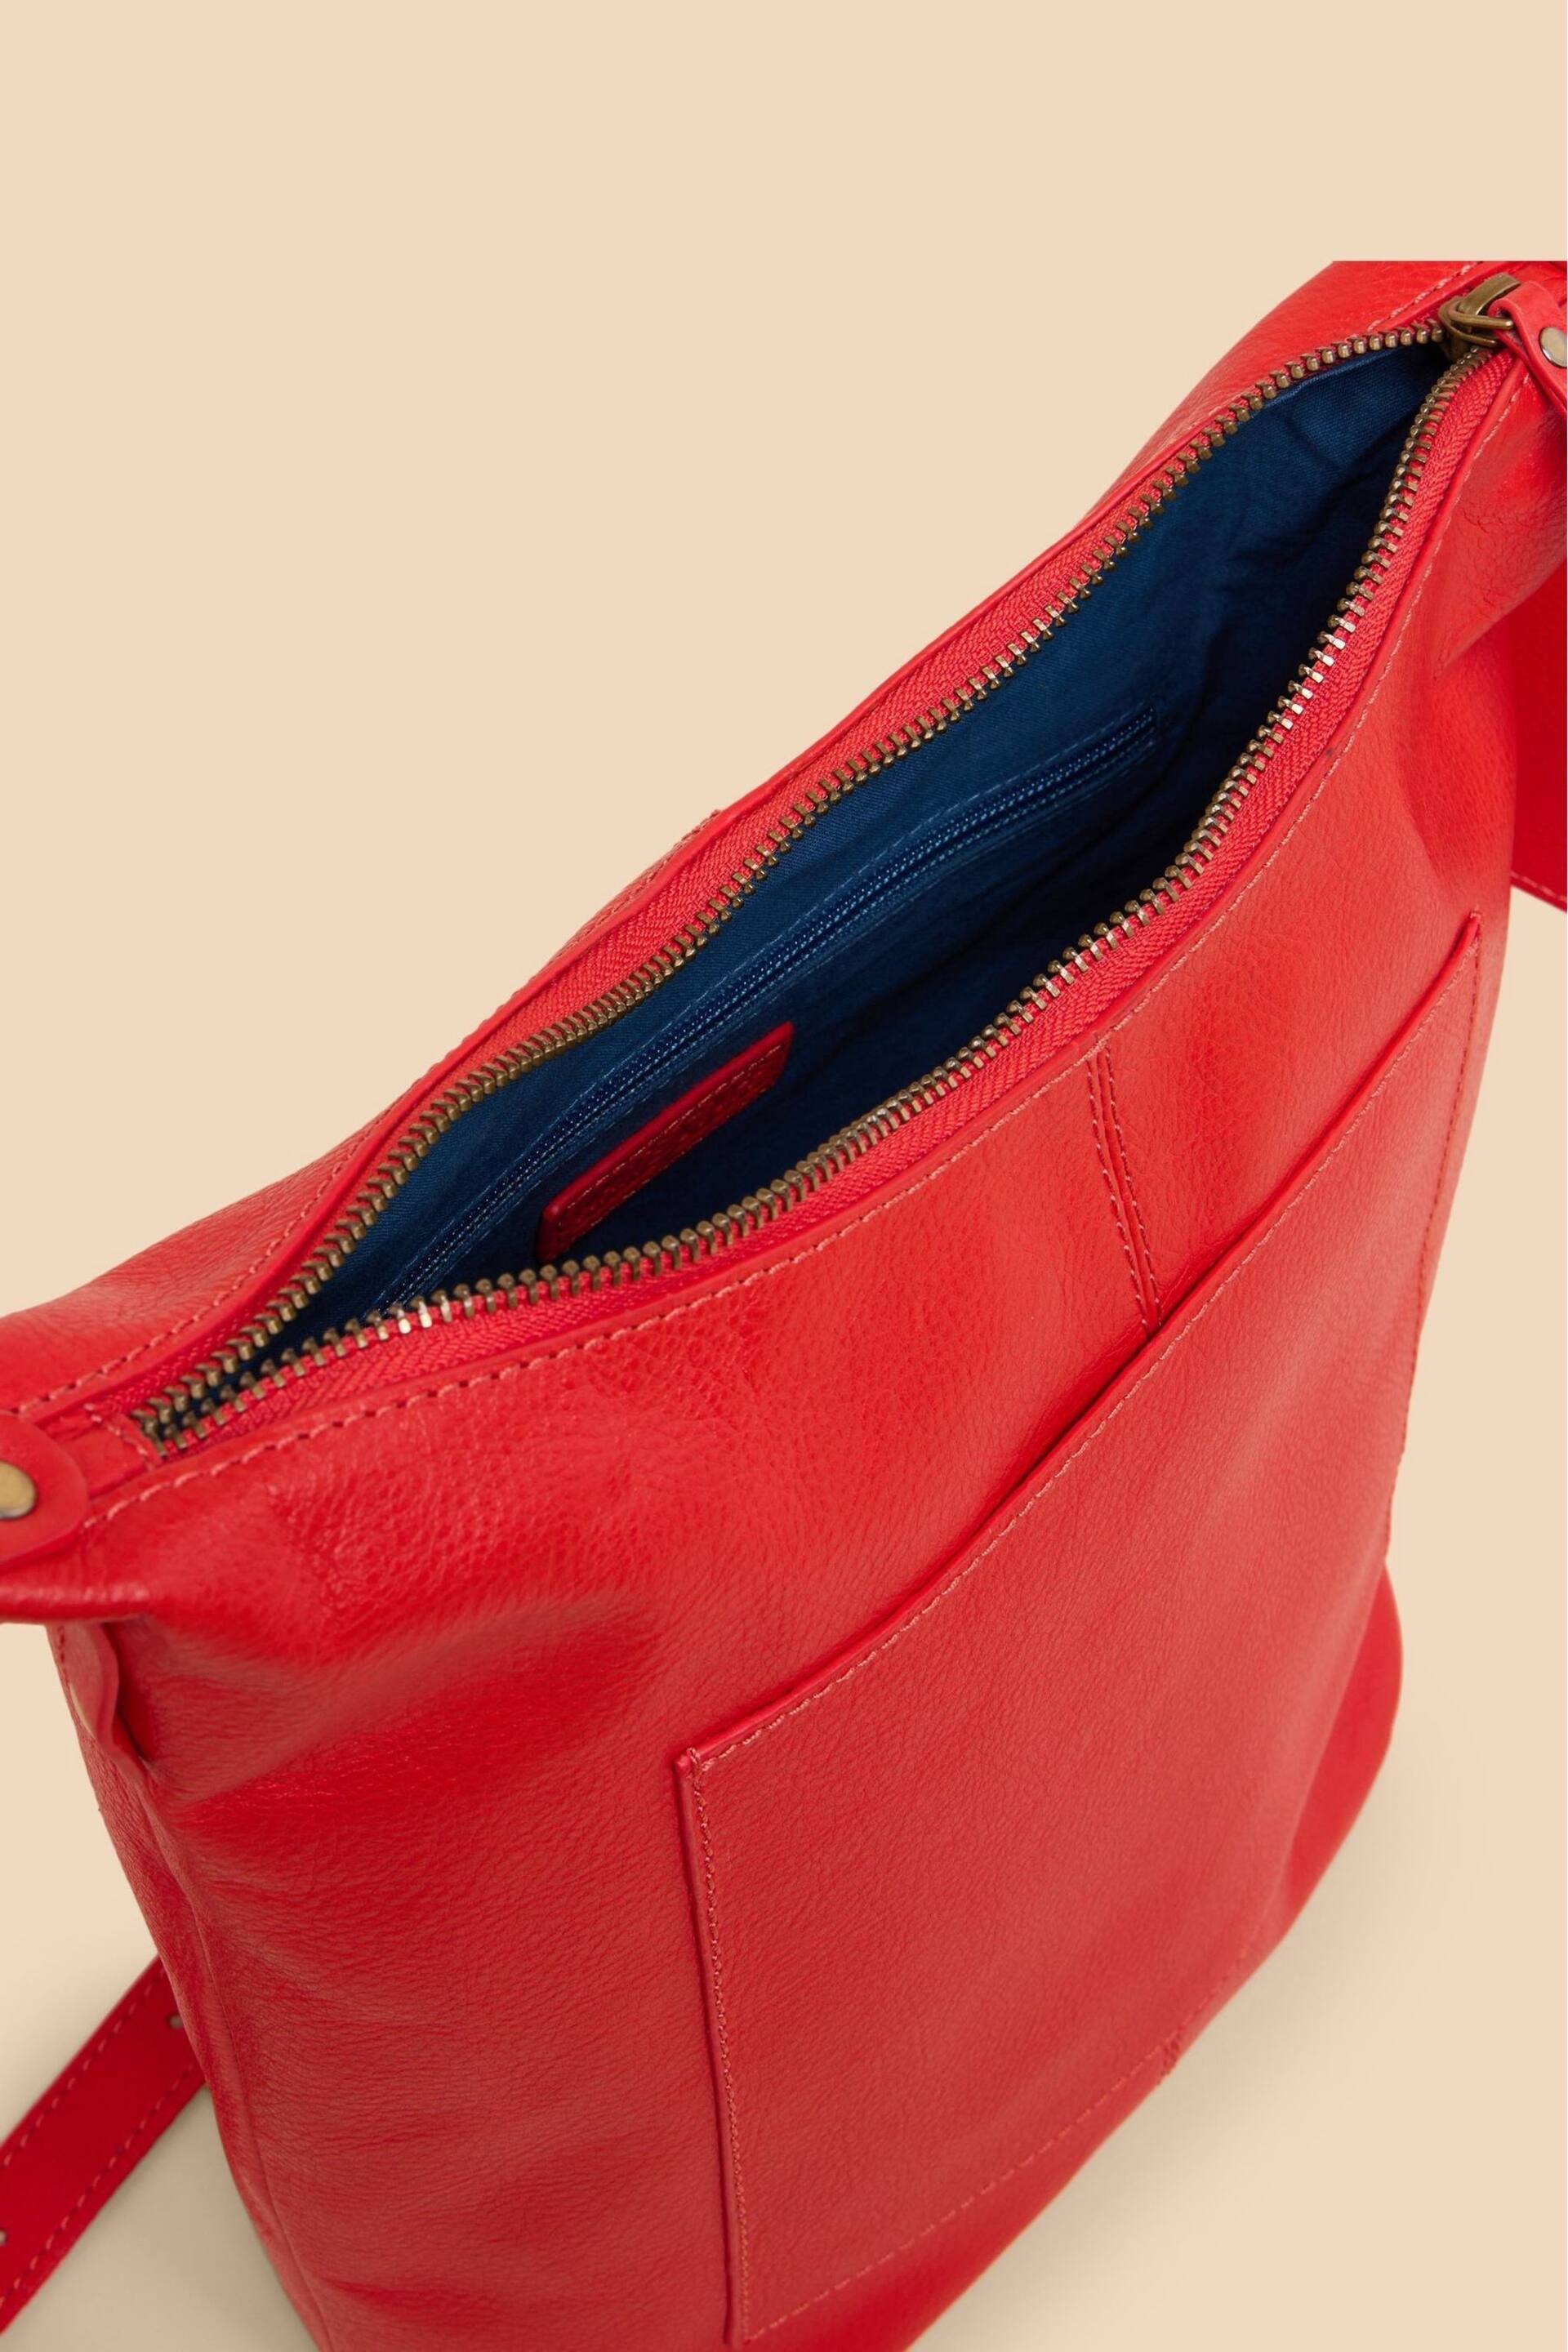 White Stuff Orange Fern Leather Cross-Body Bag - Image 4 of 5